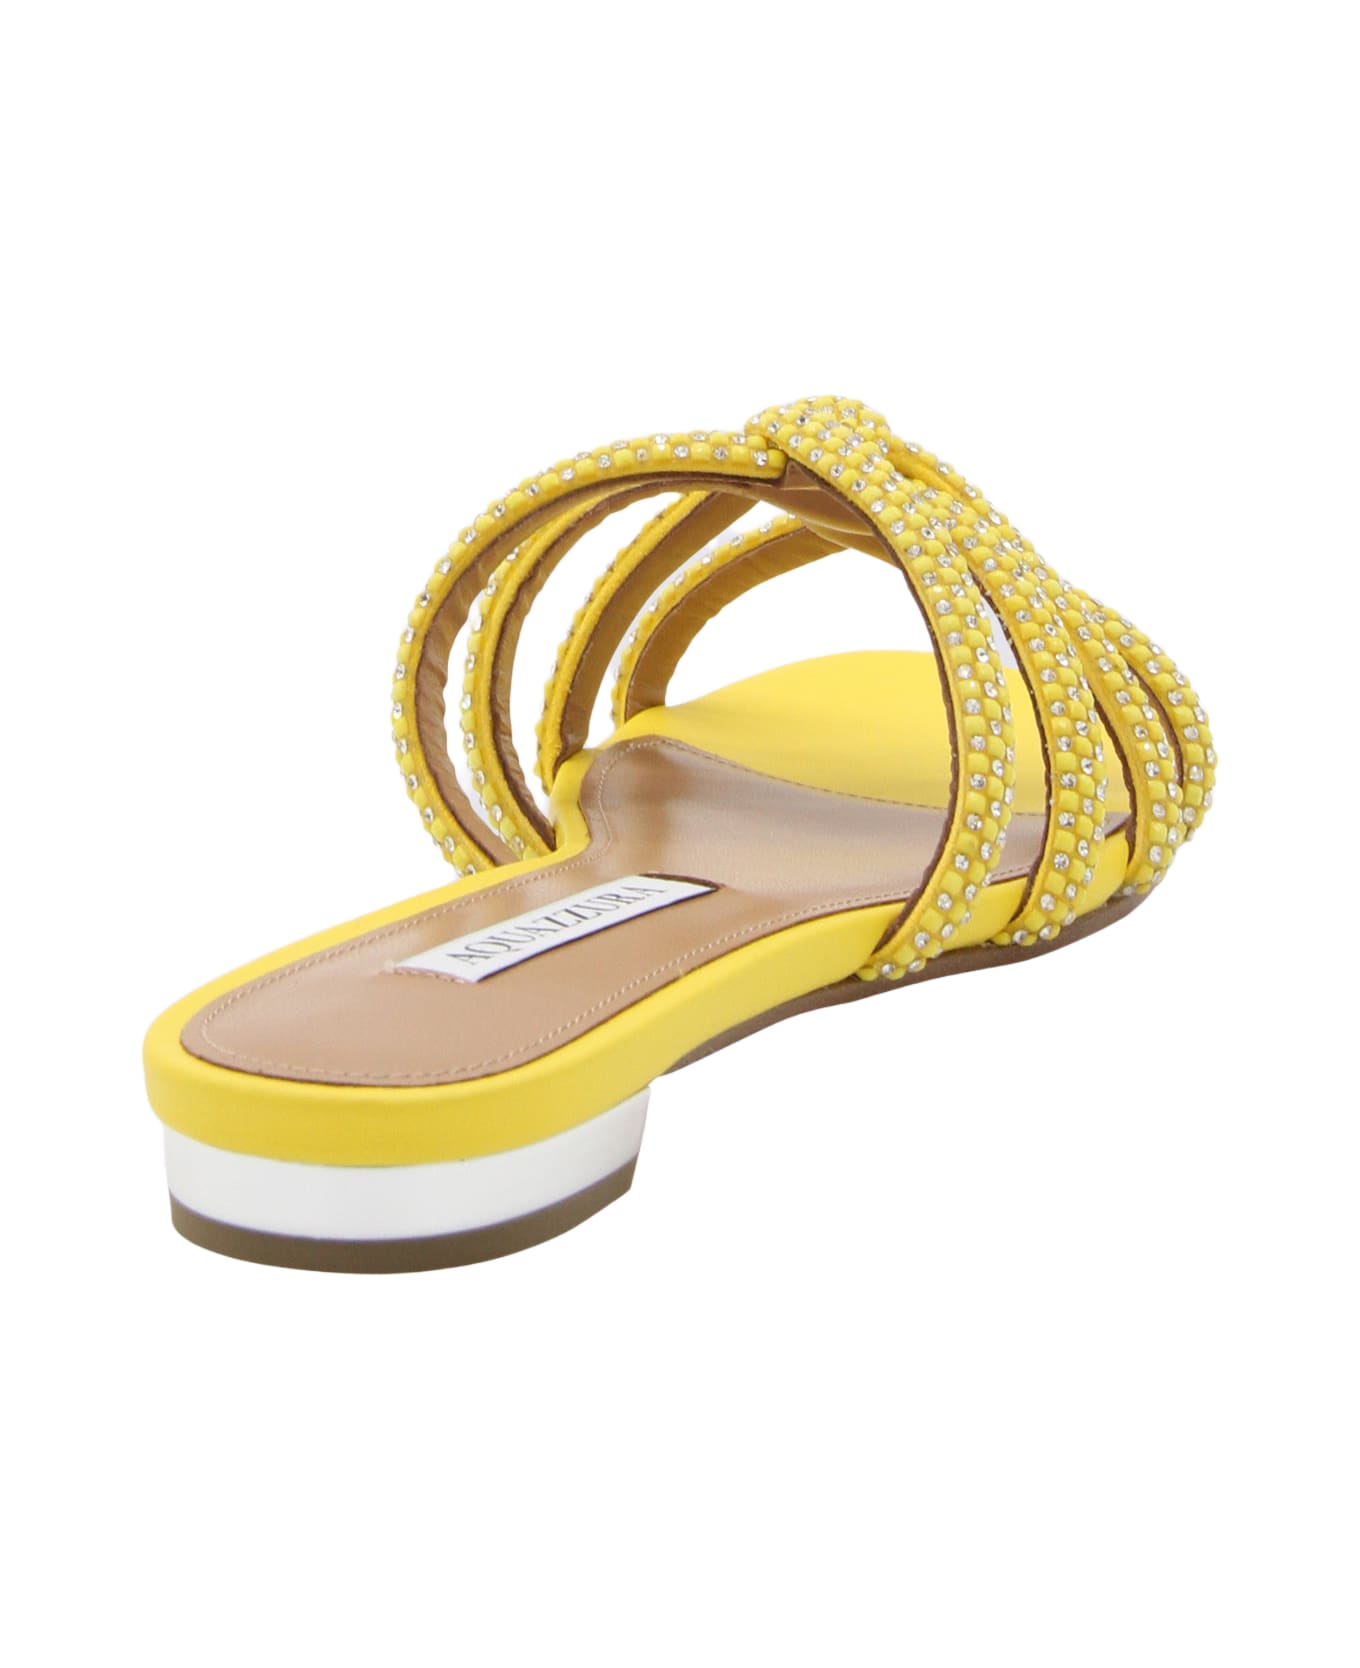 Aquazzura Yellow Leather Sandals - CITRON サンダル